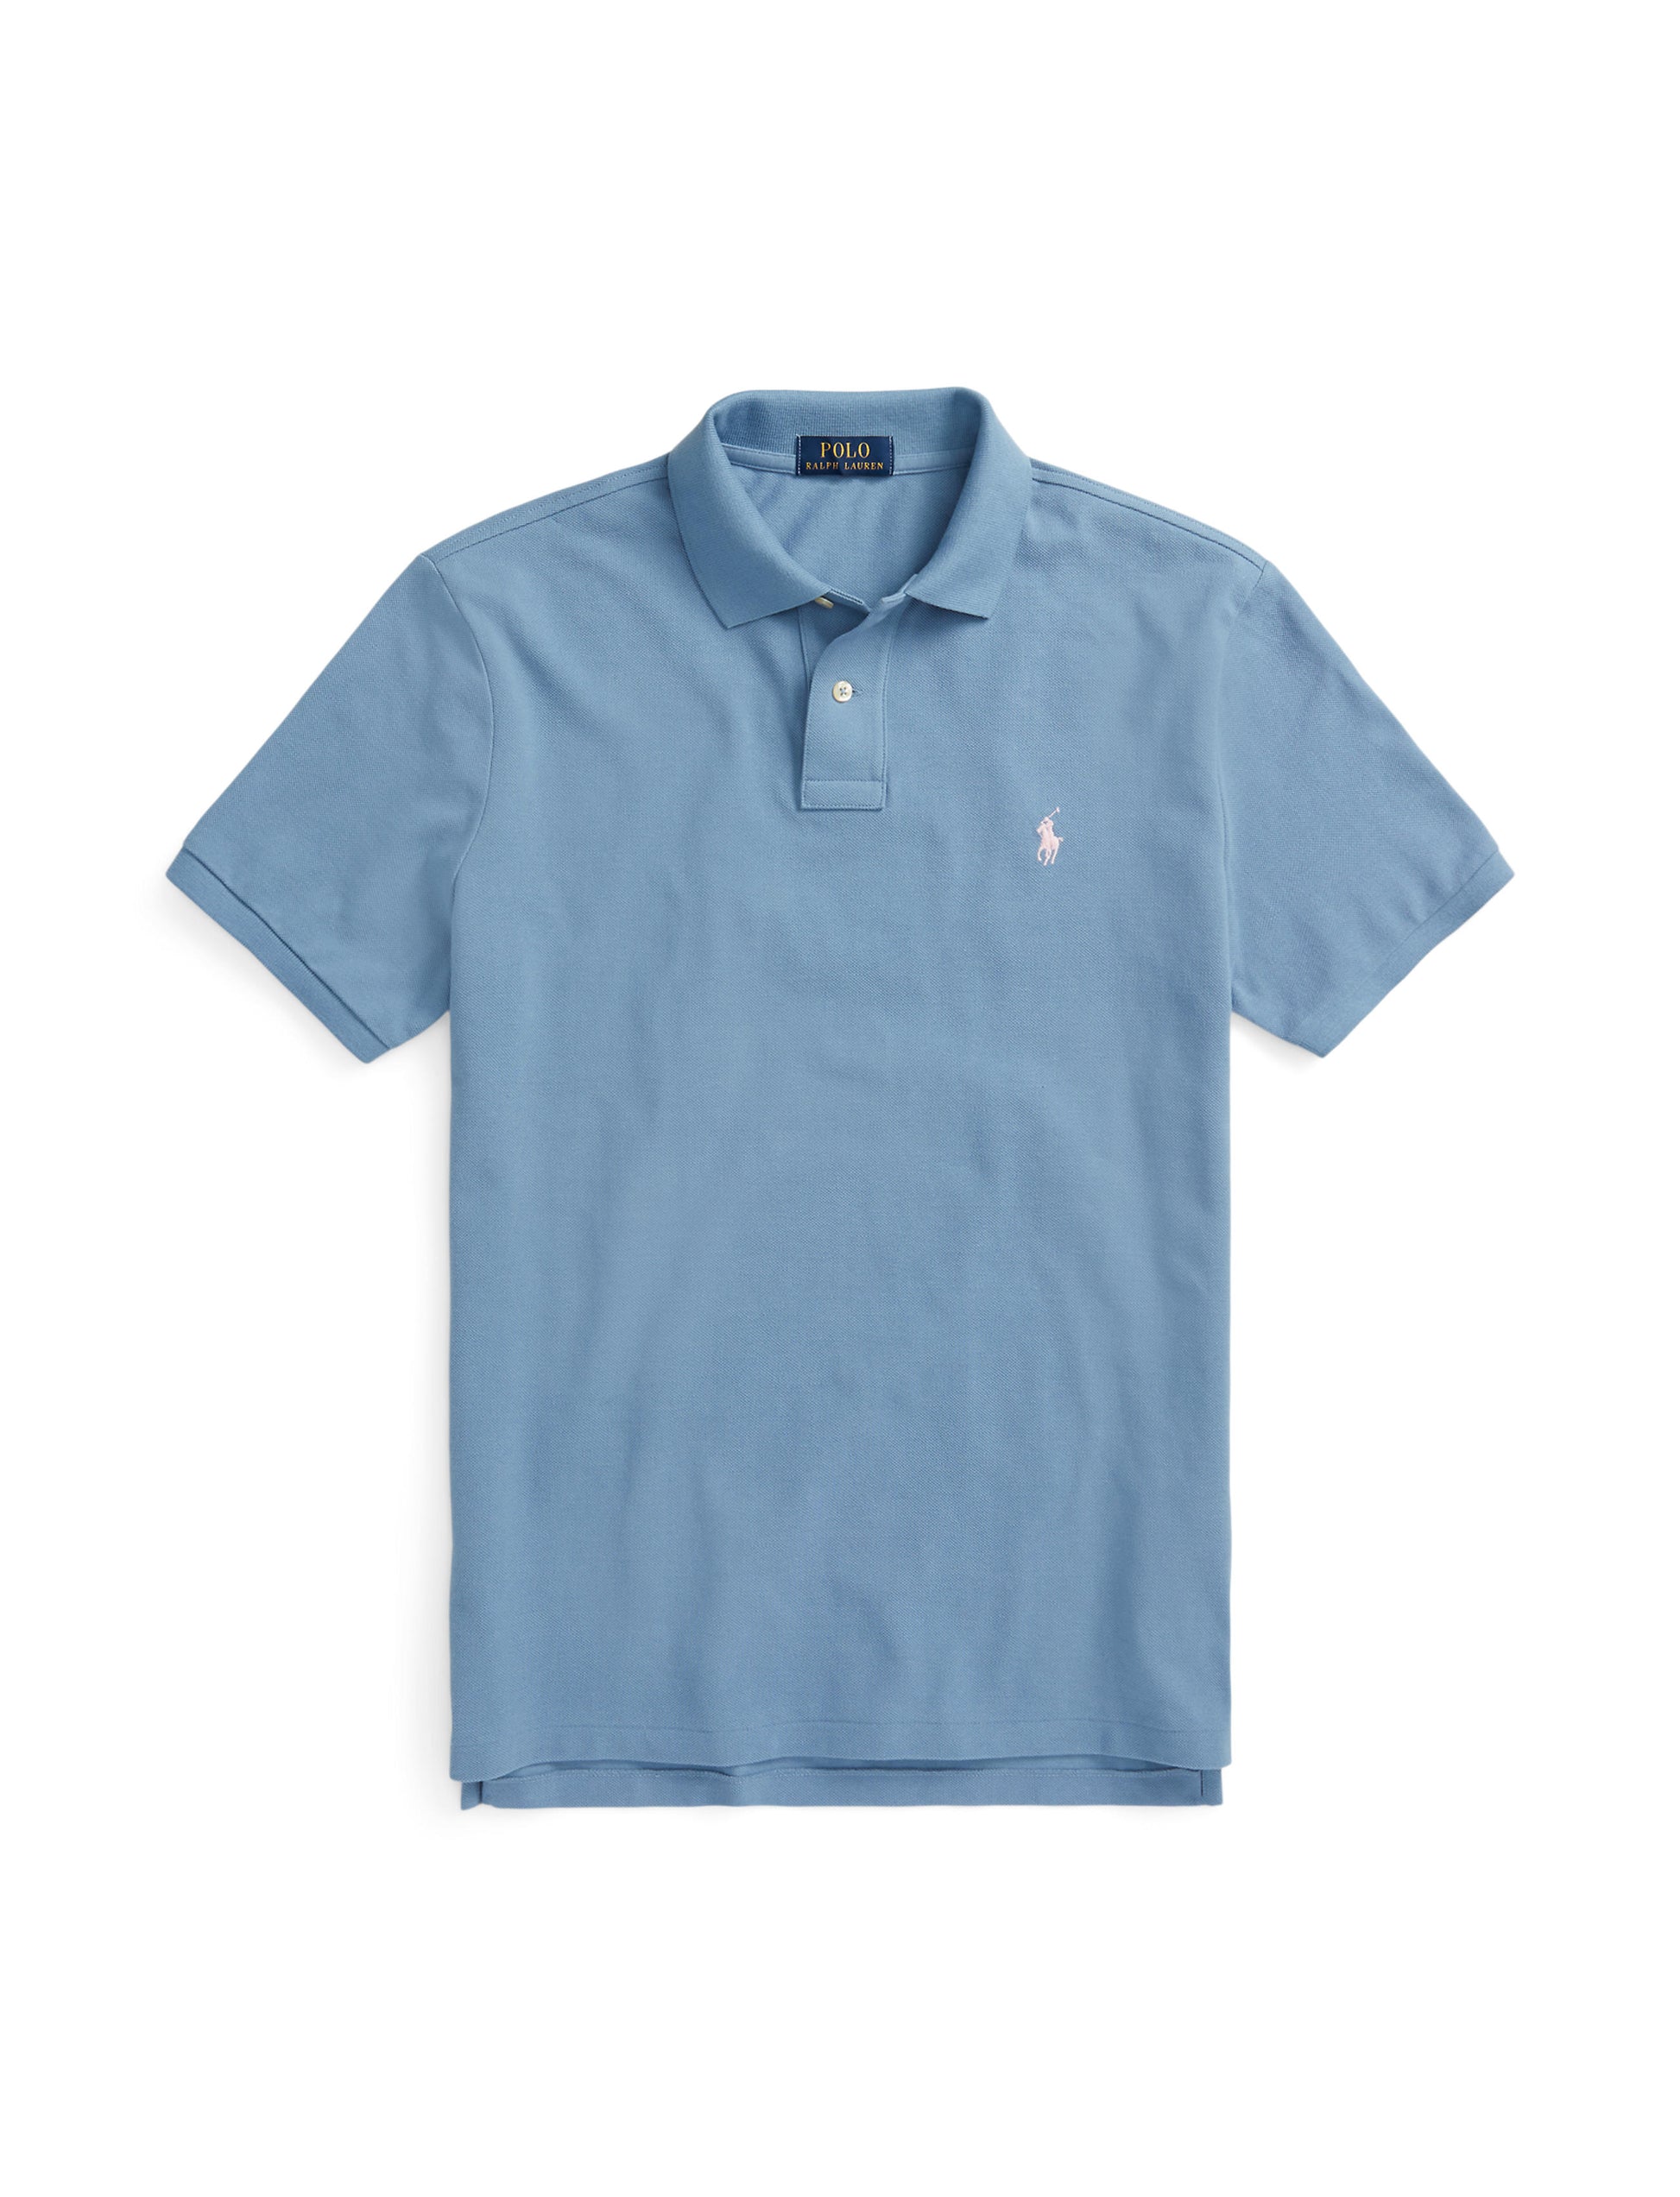 Tommy Hilfiger, Shirts, Tommy Hilfiger Mens Aqua Slim Fit Short Sleeve  Mesh Polo Shirt Size Xl